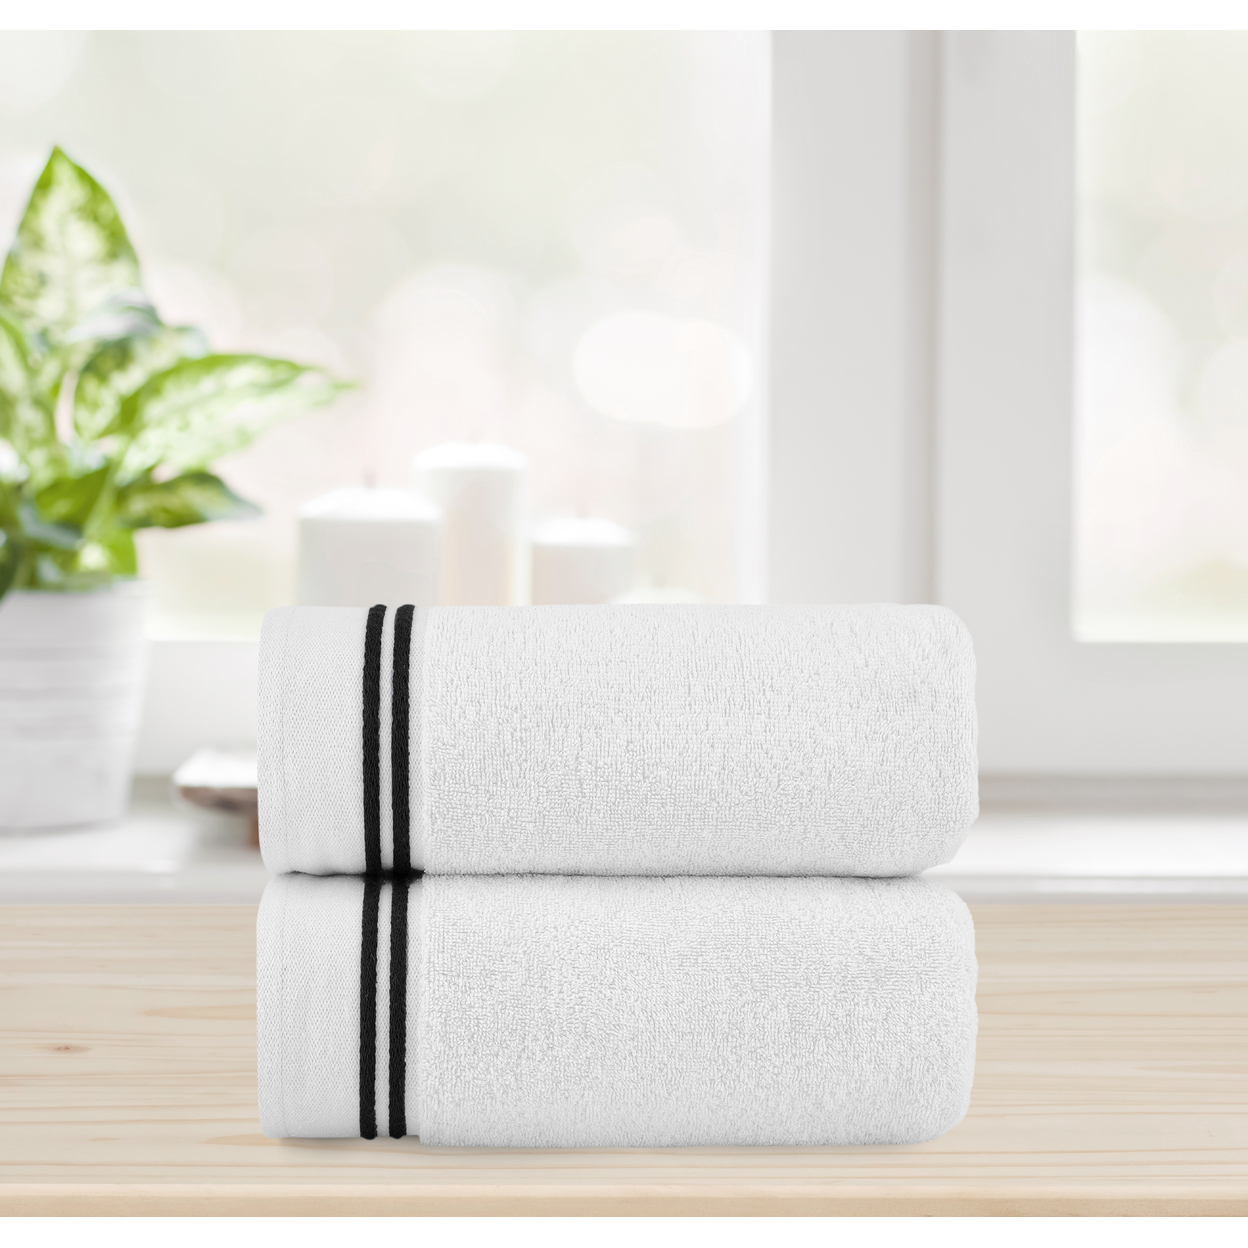 Chic Home Luxurious 2-Piece 100% Pure Turkish Cotton White Bath Sheet Towels, 34x68, Striped Hem, OEKO-TEX Certified Set - White-black